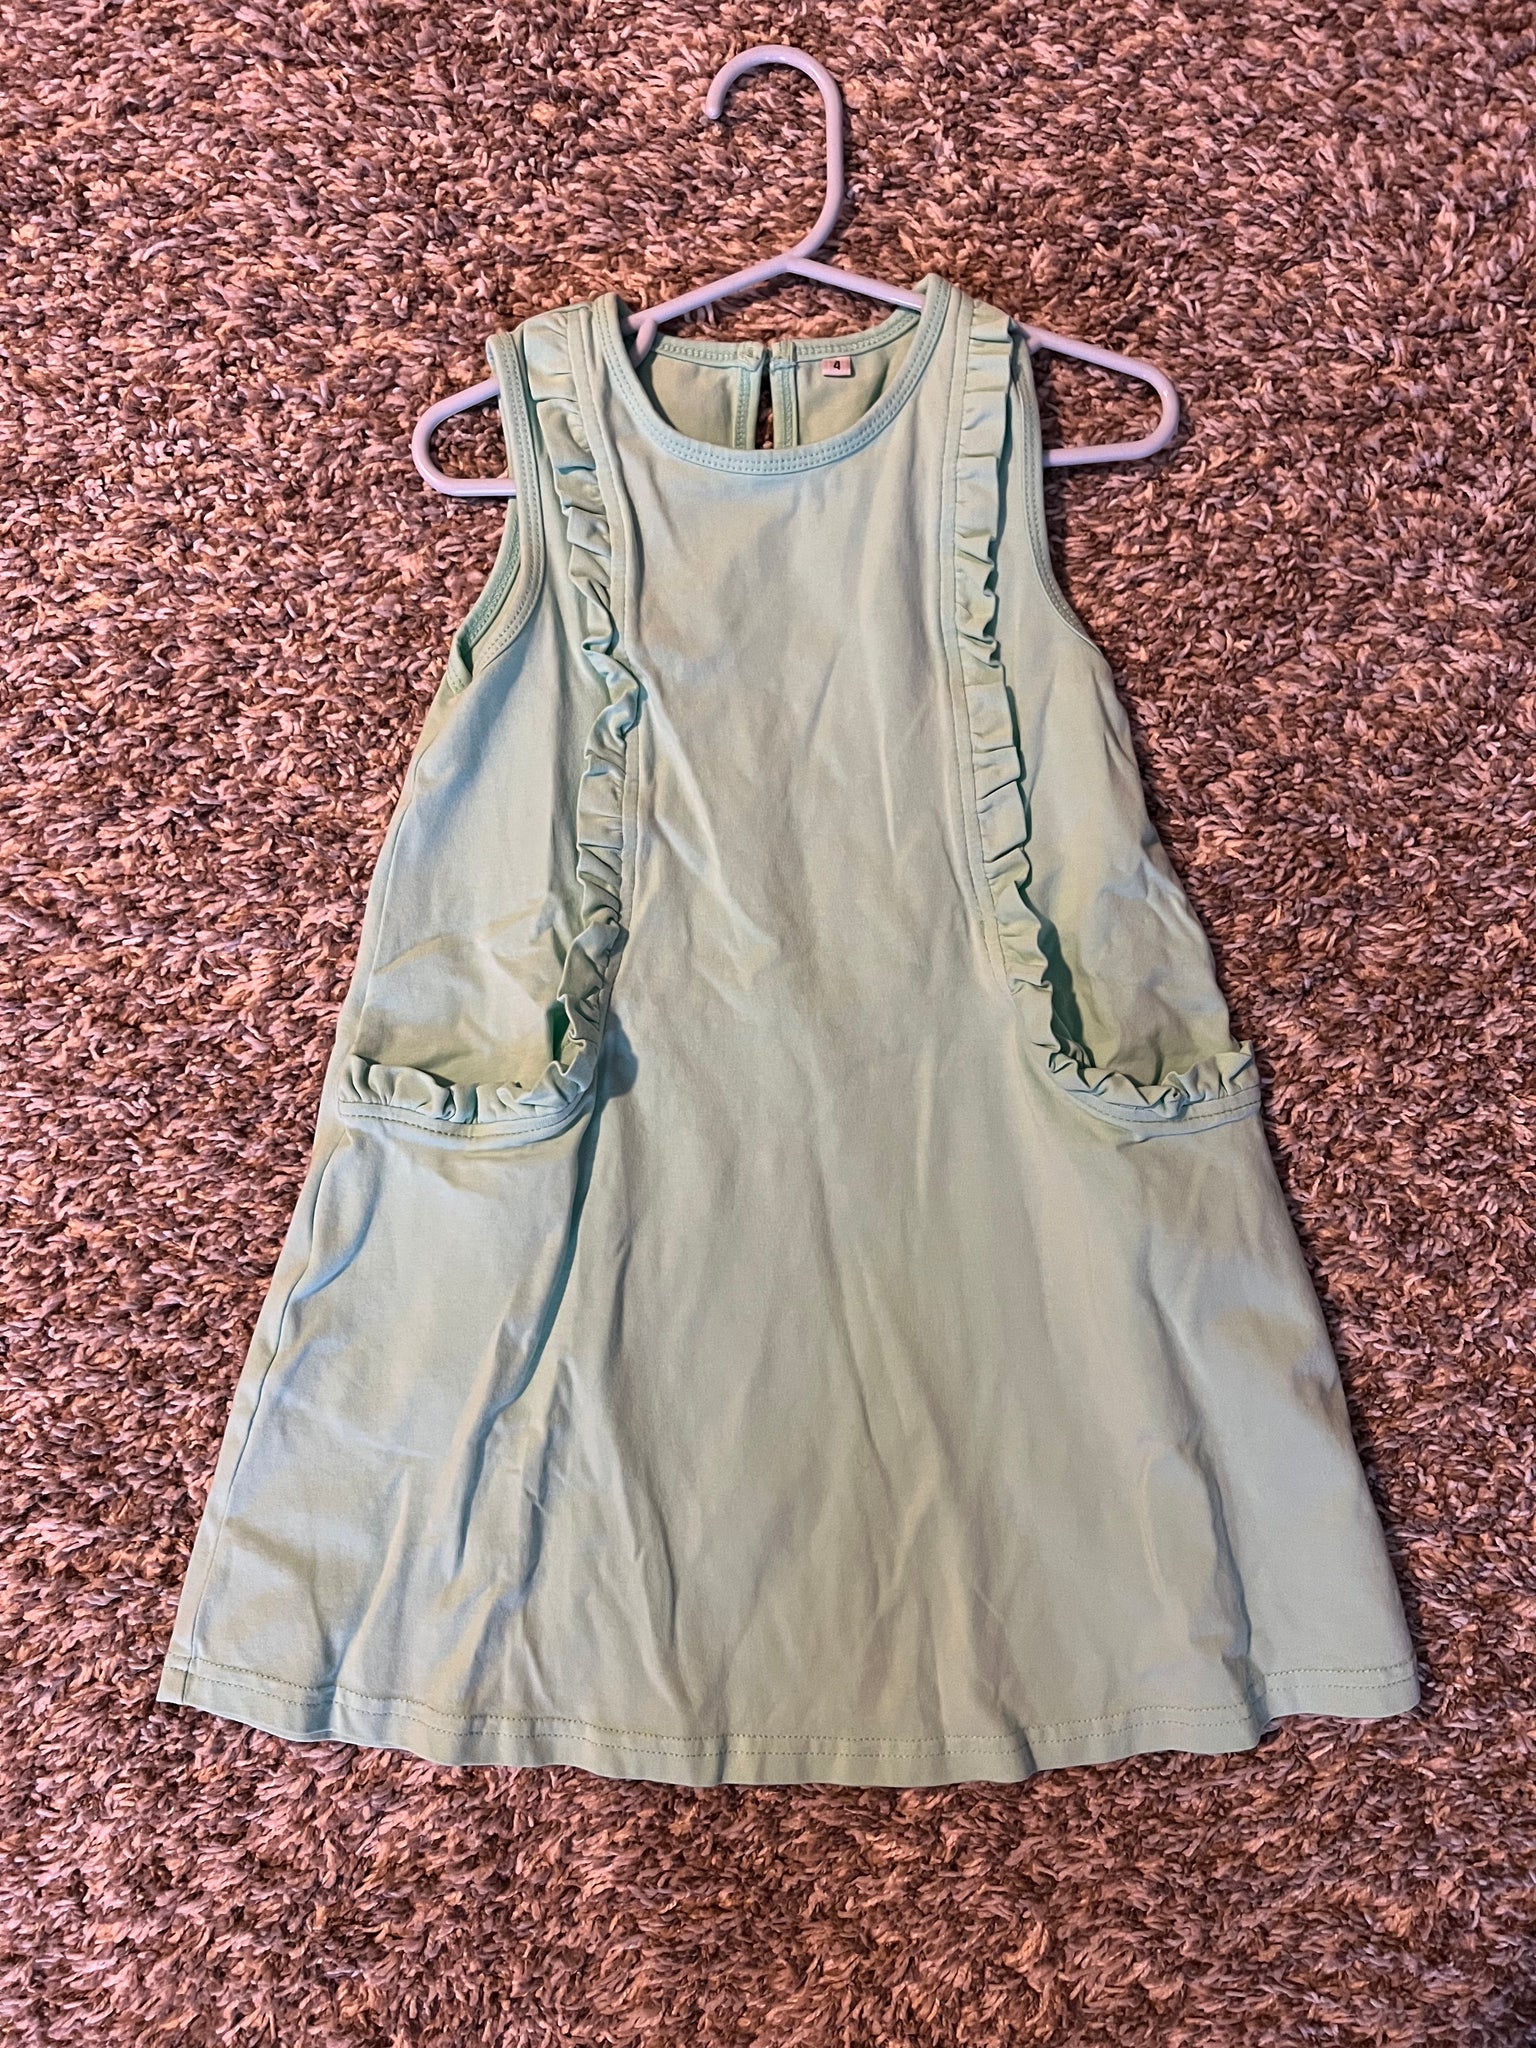 Mint Sleeveless Dress with Pockets Size 4